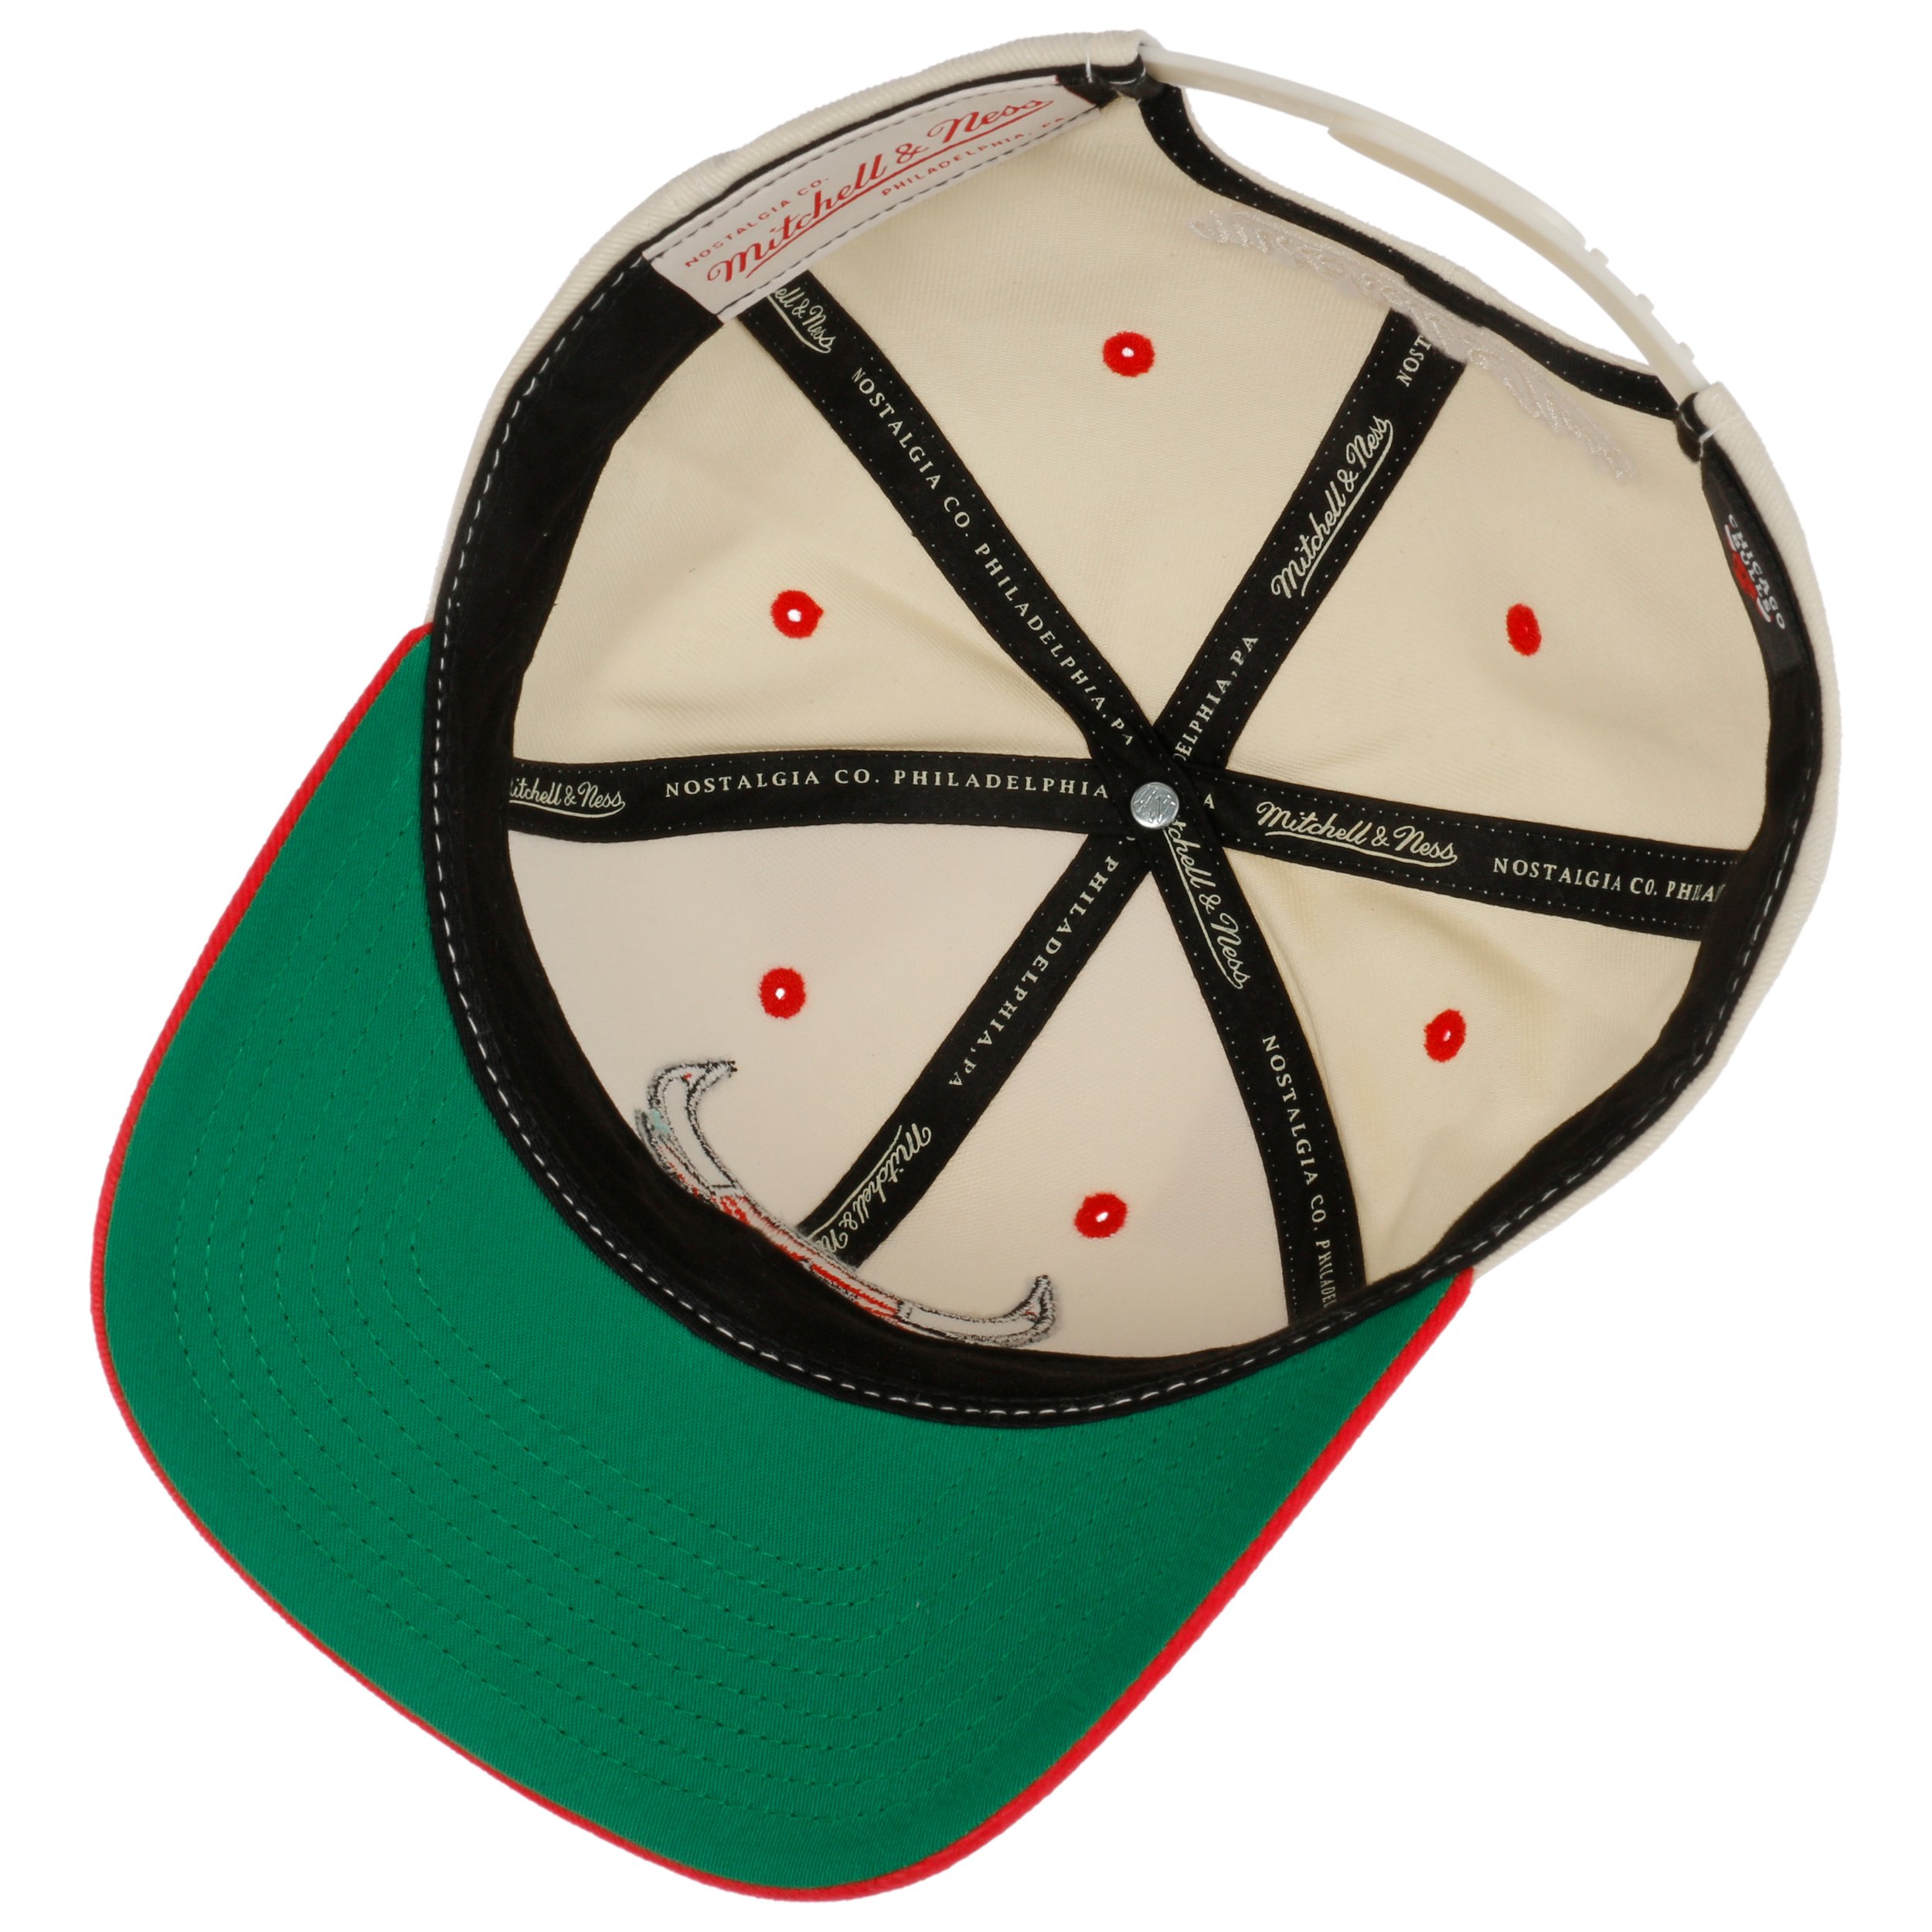 mitchell & ness baseball caps